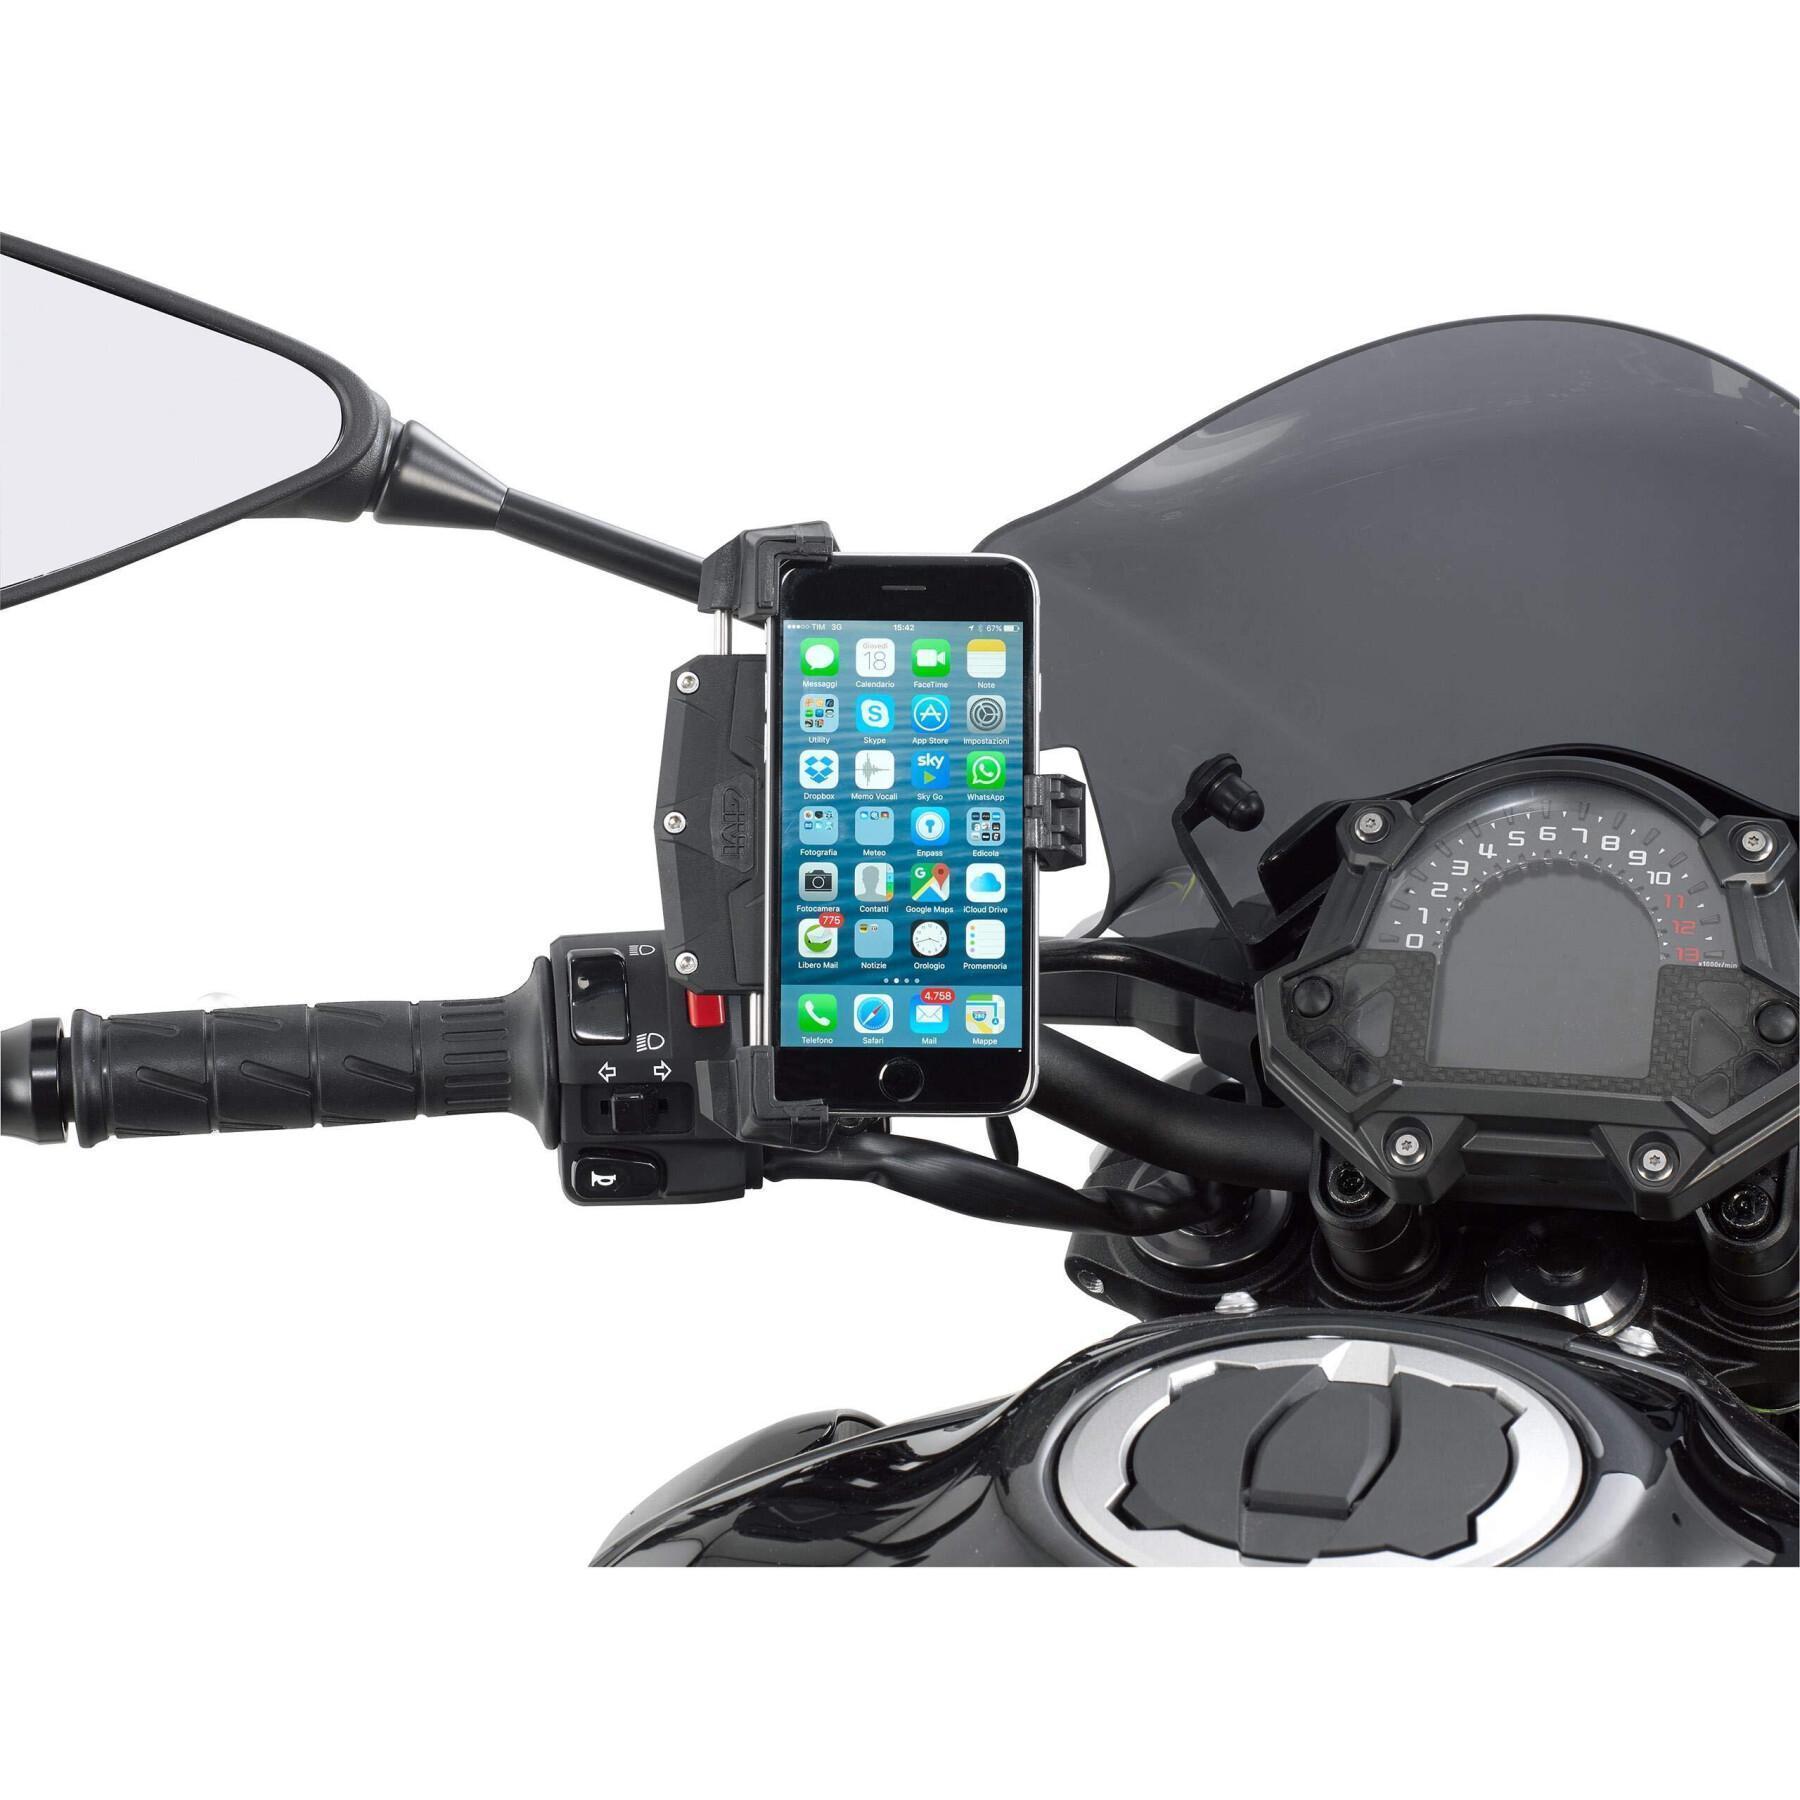 Smart clip s920m motorcycle smartphone holder Givi